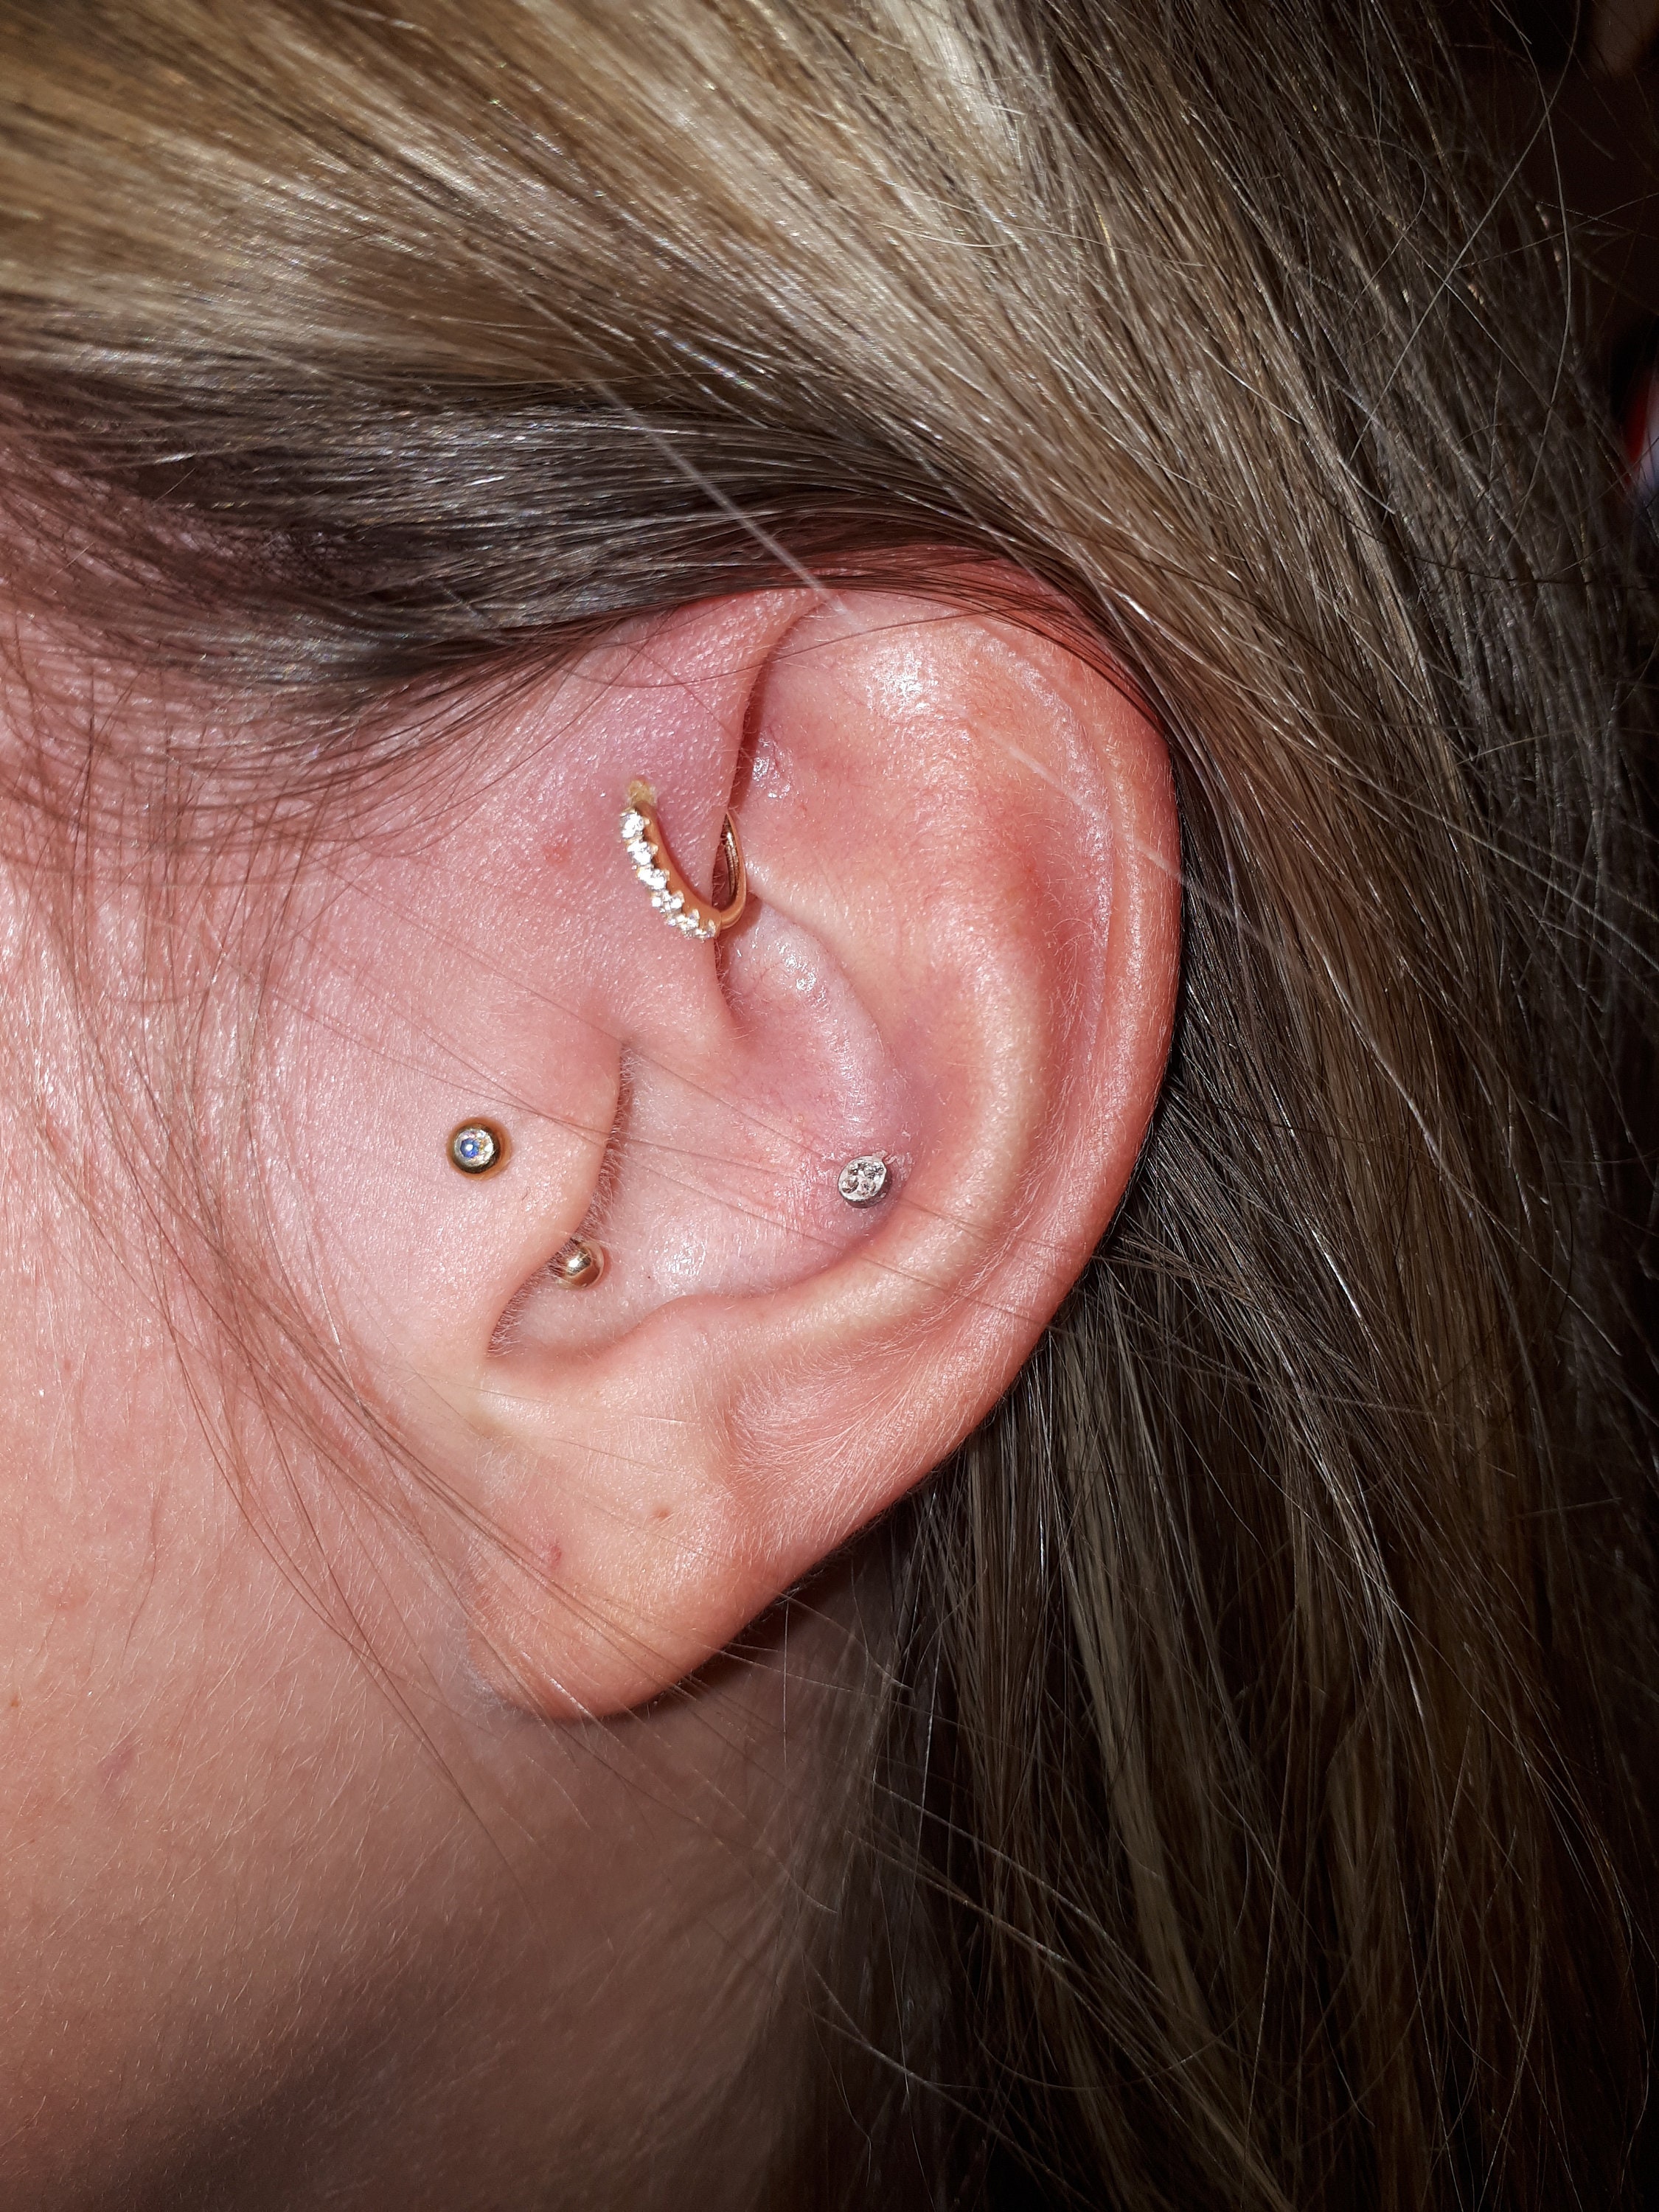 Nose Hoop Small Septum Ring Piercing Ear Cartilage Tragus Helix Piercing  Eter | eBay